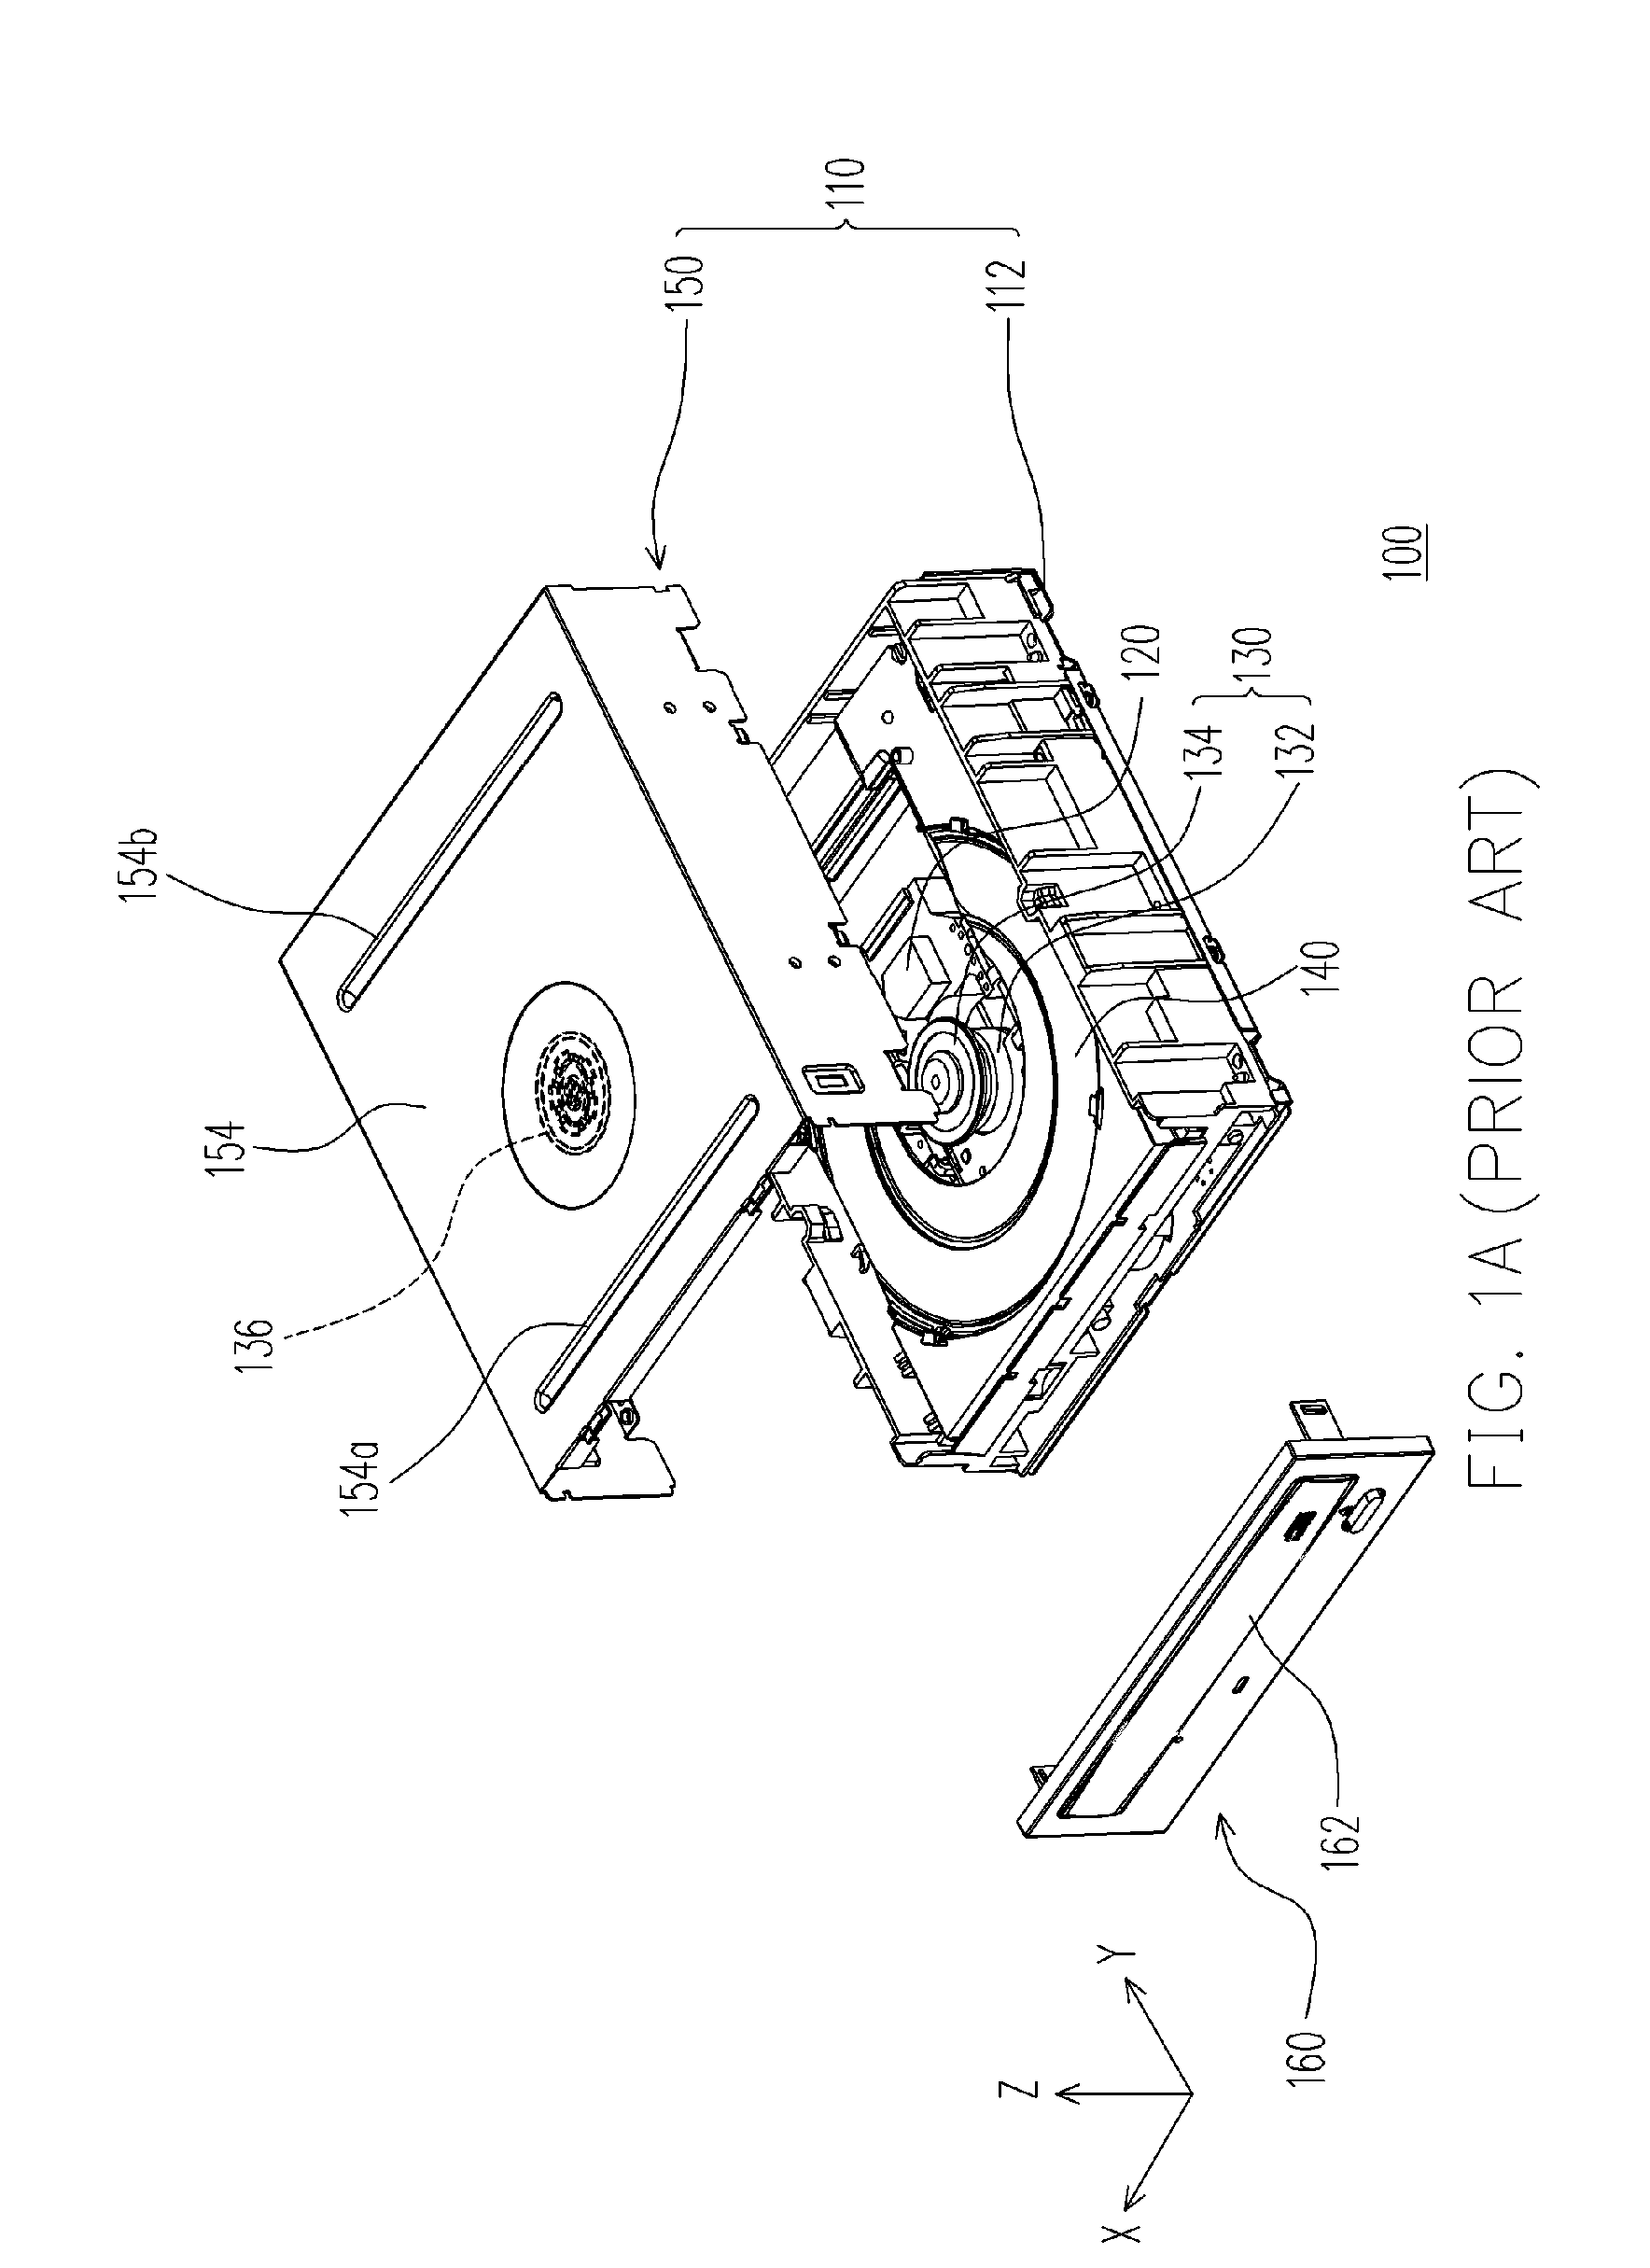 Optical disc recording device